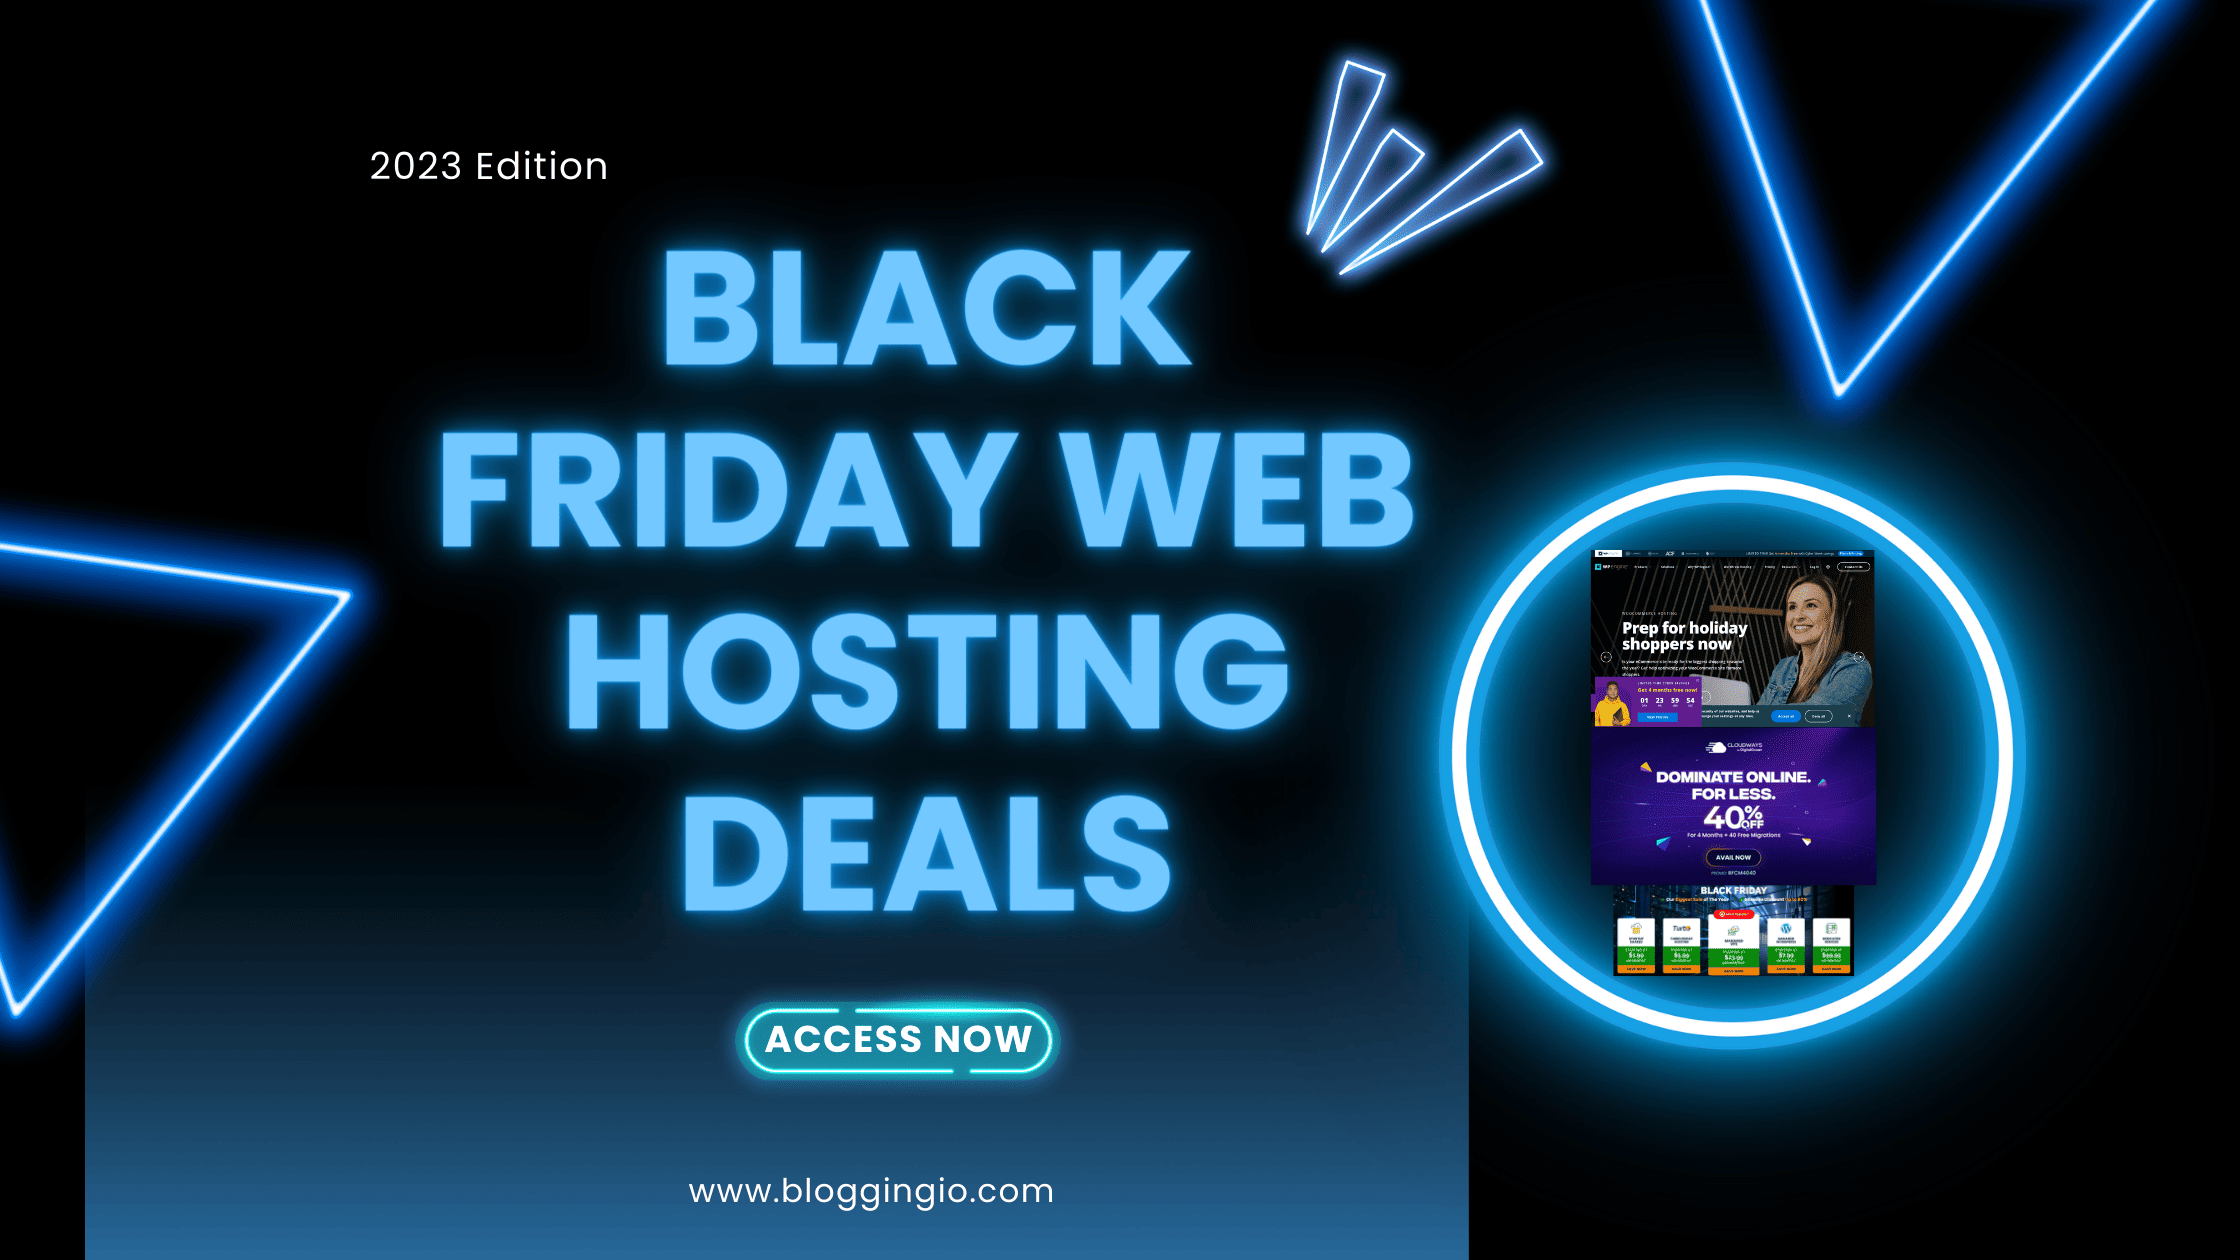 Black Friday Web Hosting Deals 2023 at Bloggingio.com